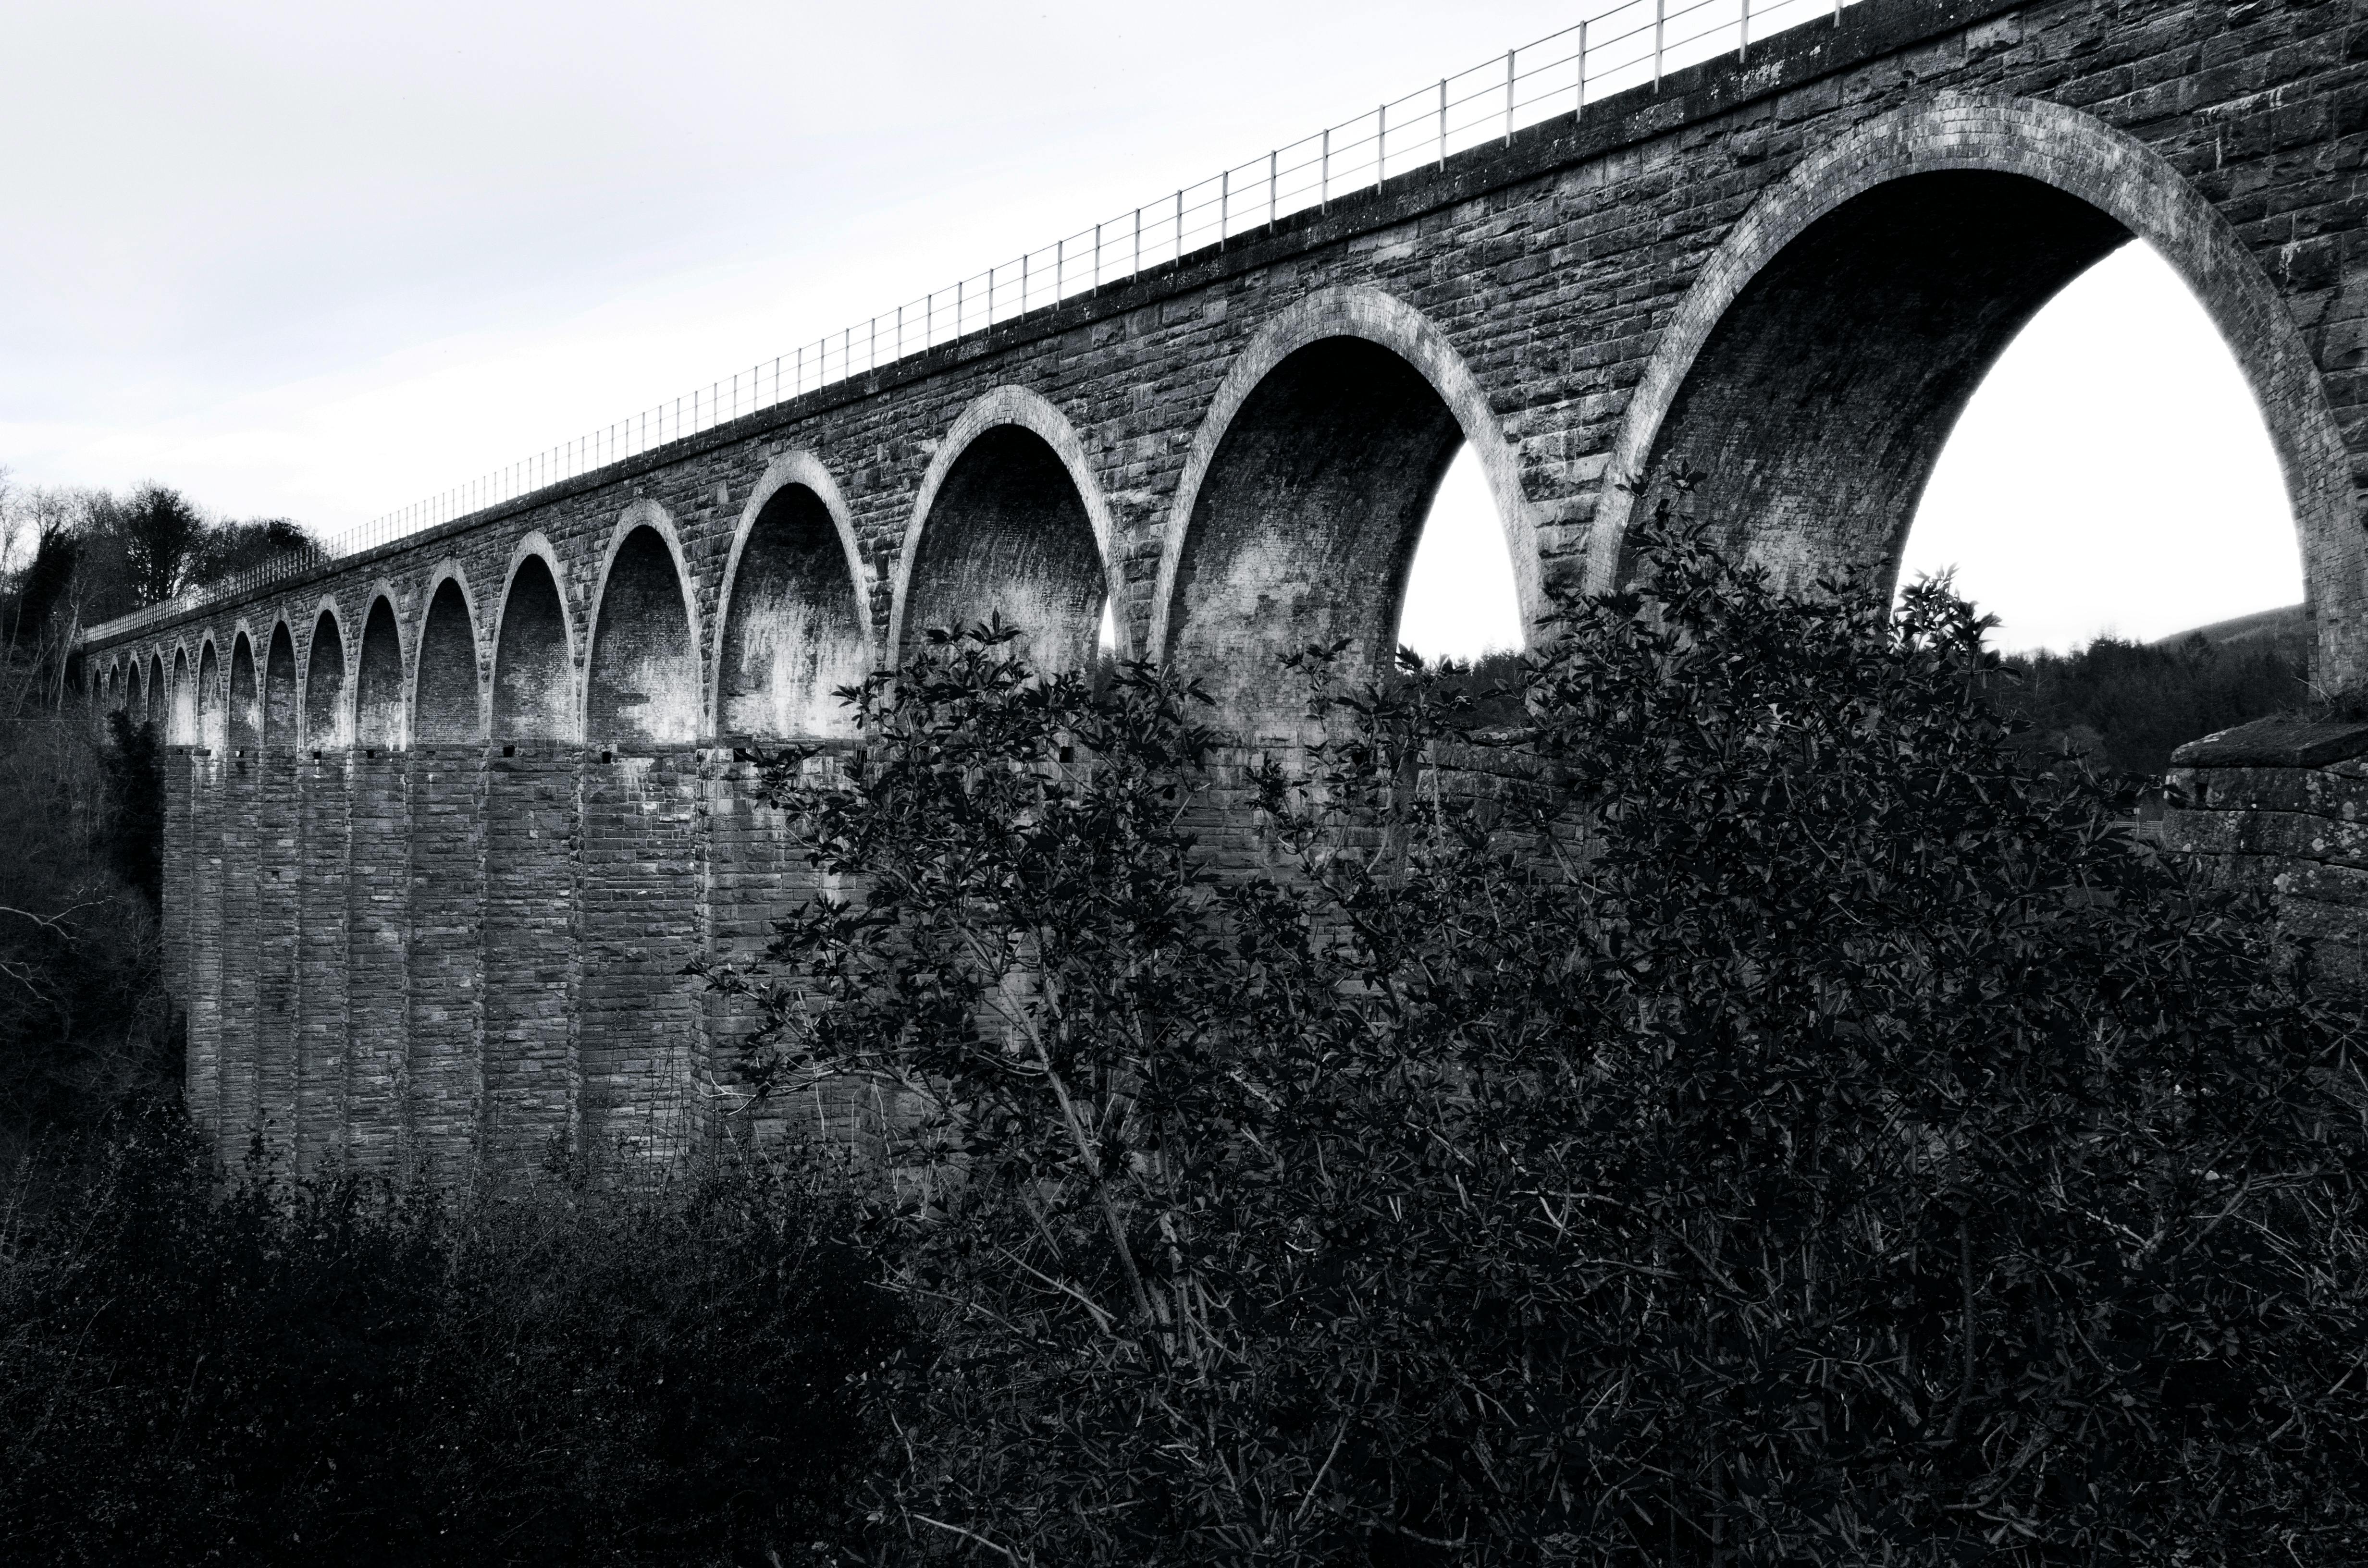 Free stock photo of Roman Viaduct